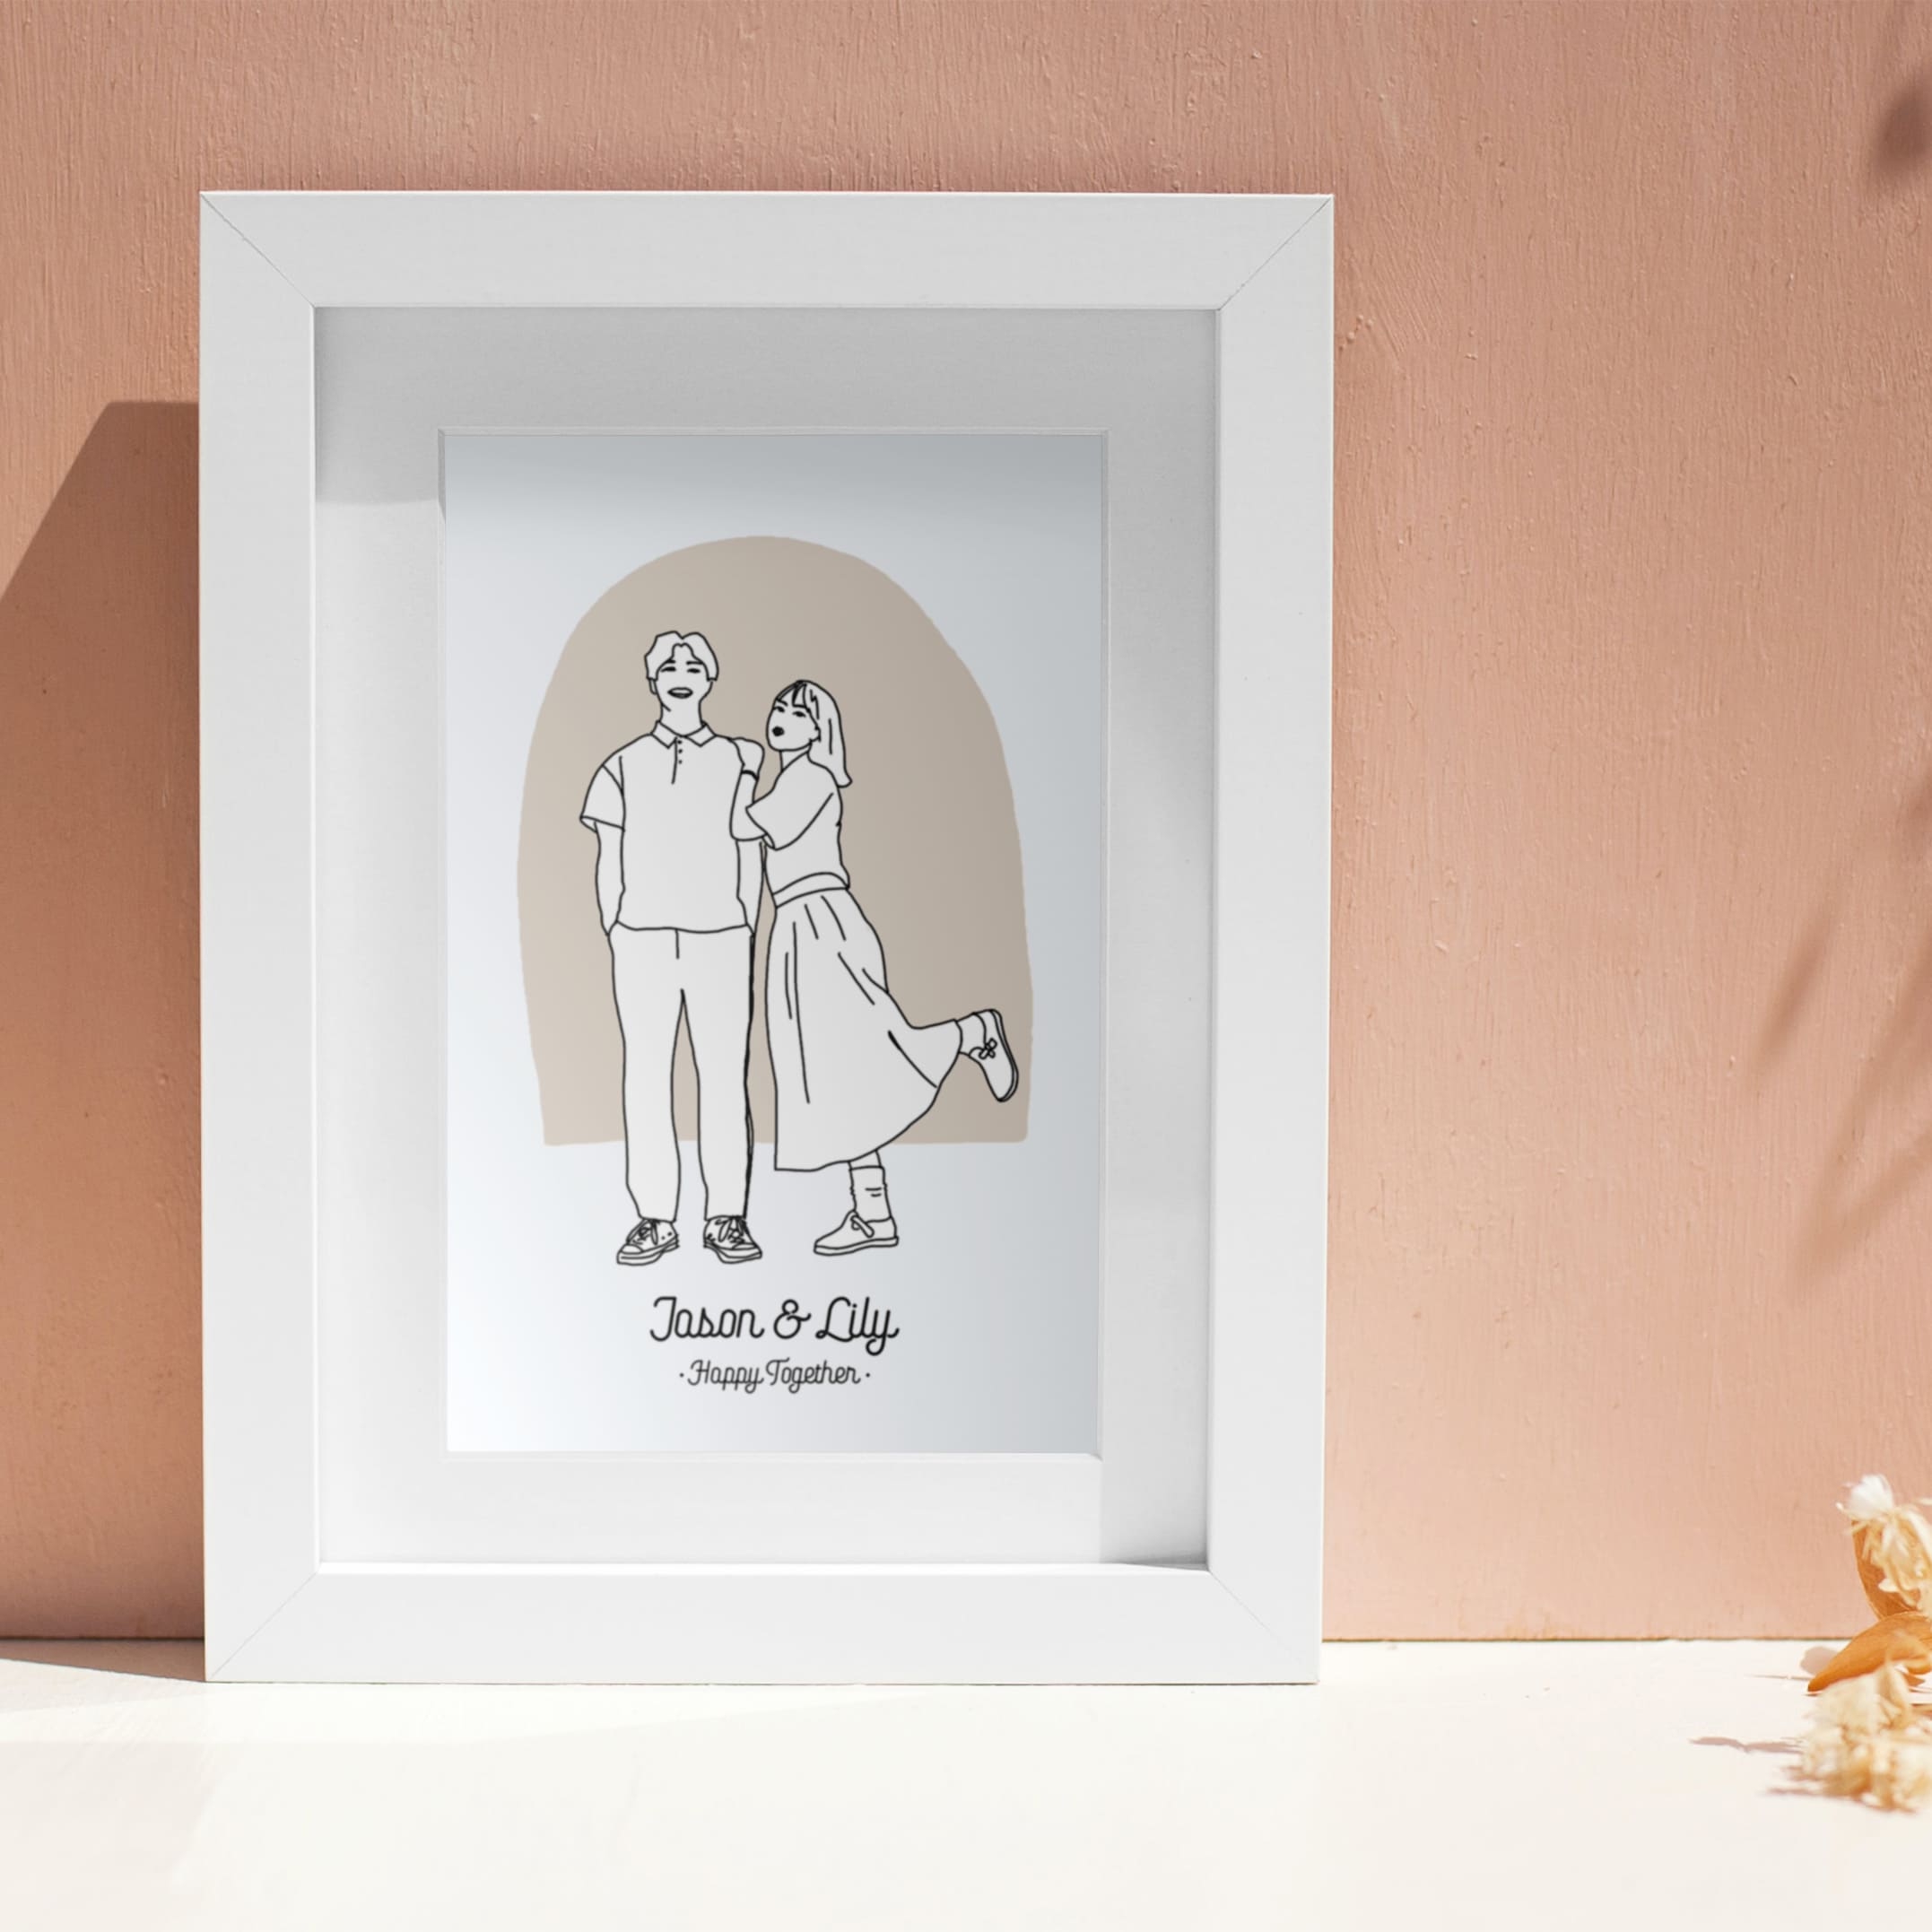 minimal hand illustrated line art portrait of couple in digital format